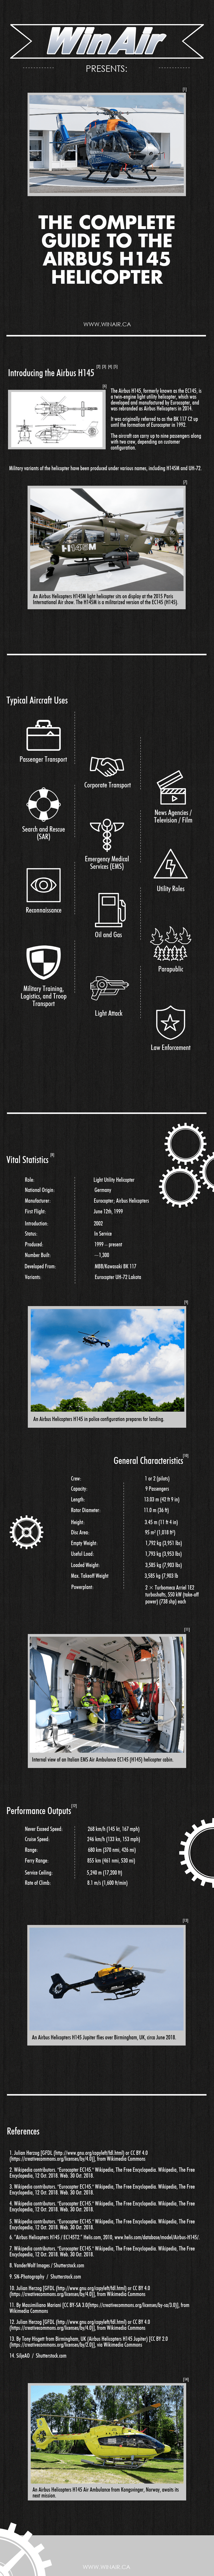 WinAir Presents: The Lockheed C-130 Hercules - Infographic Image